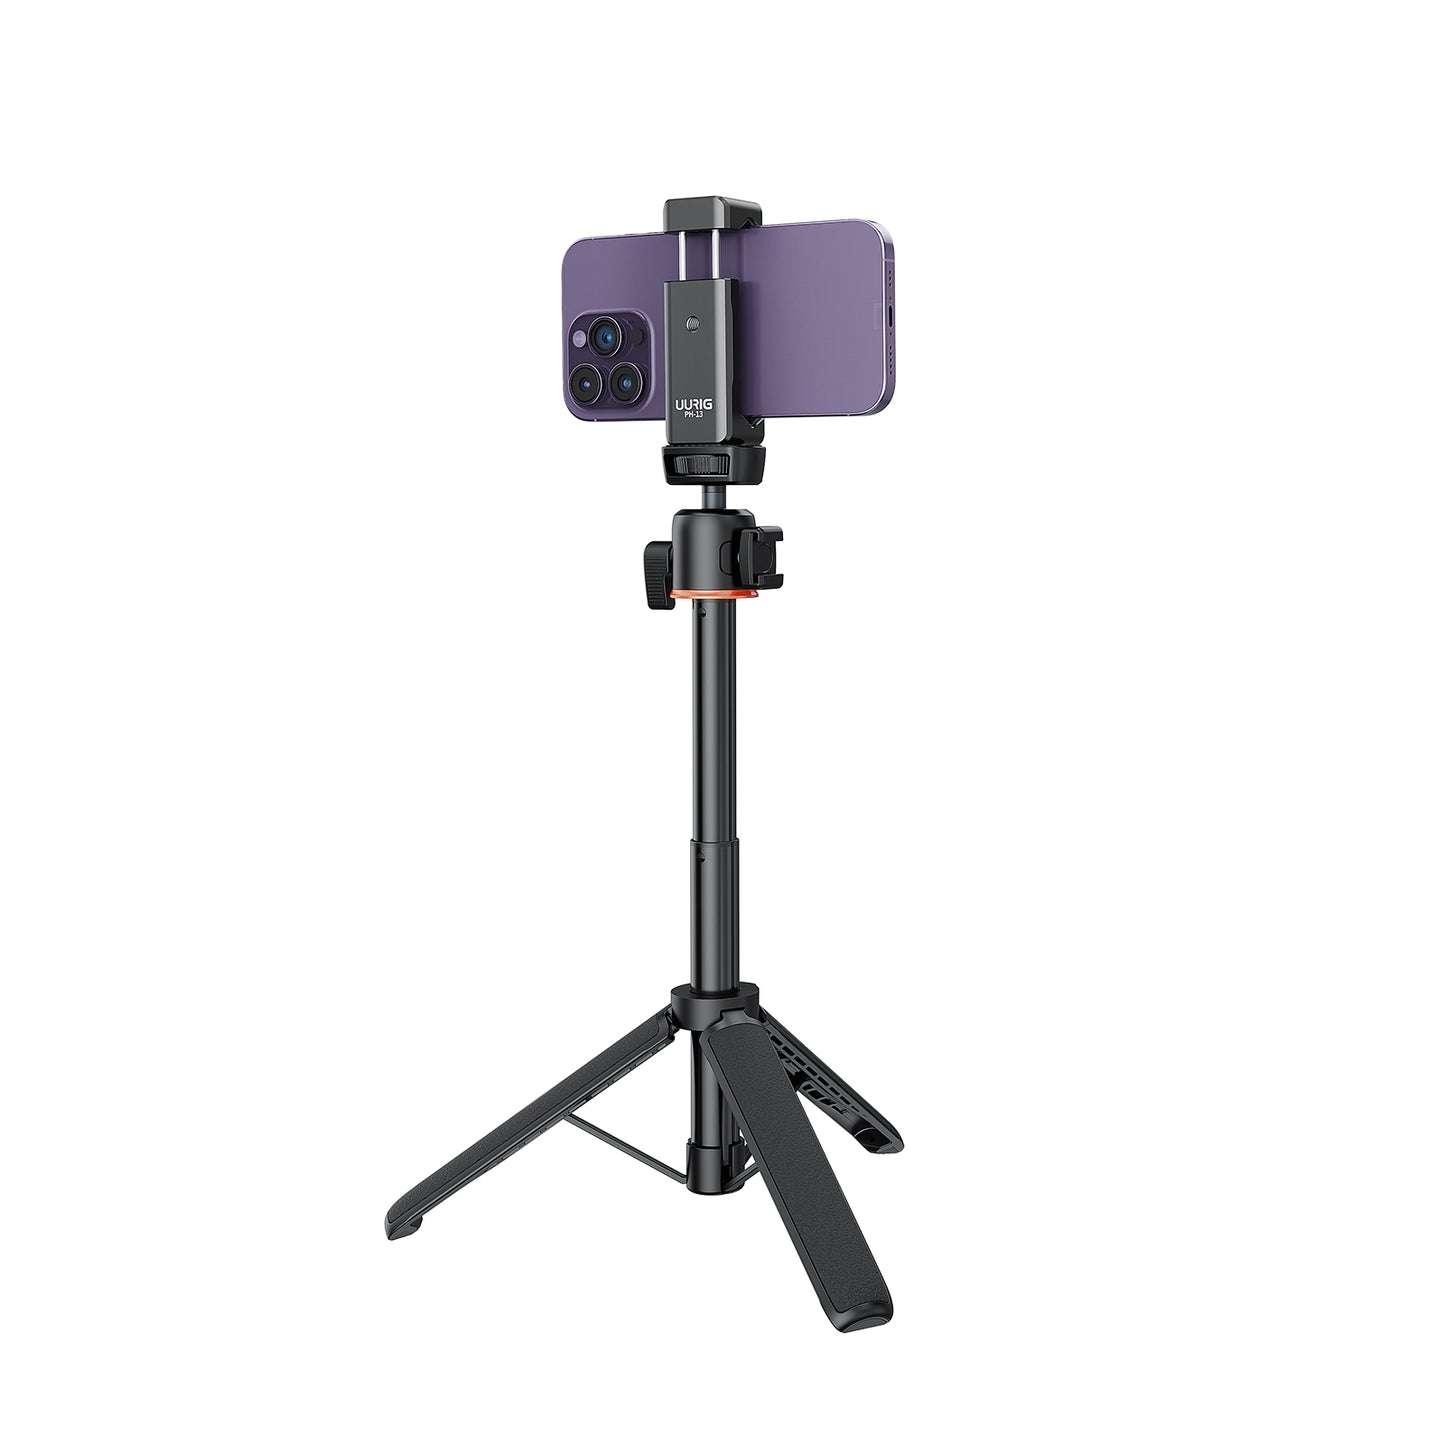 Vrig TP-06 55cm Mini Vlogging tripod with1/4"